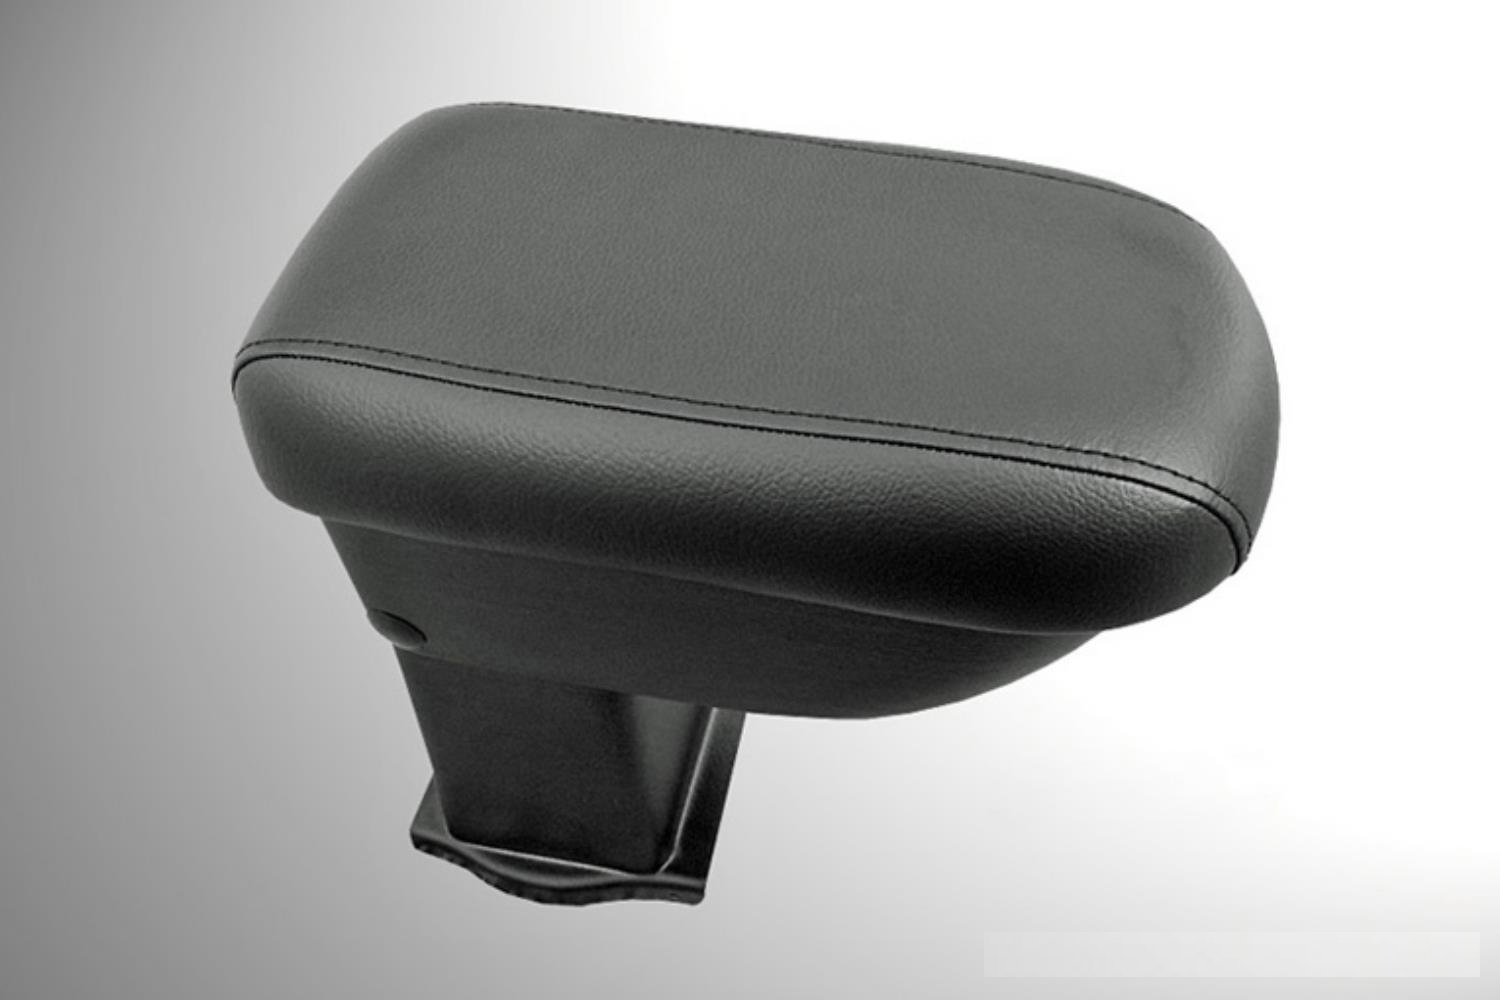 https://www.carparts-expert.com/images/stories/virtuemart/product/dac7loar-dacia-logan-i-mcv-2006-2013-wagon-armrest-basic-1.jpg